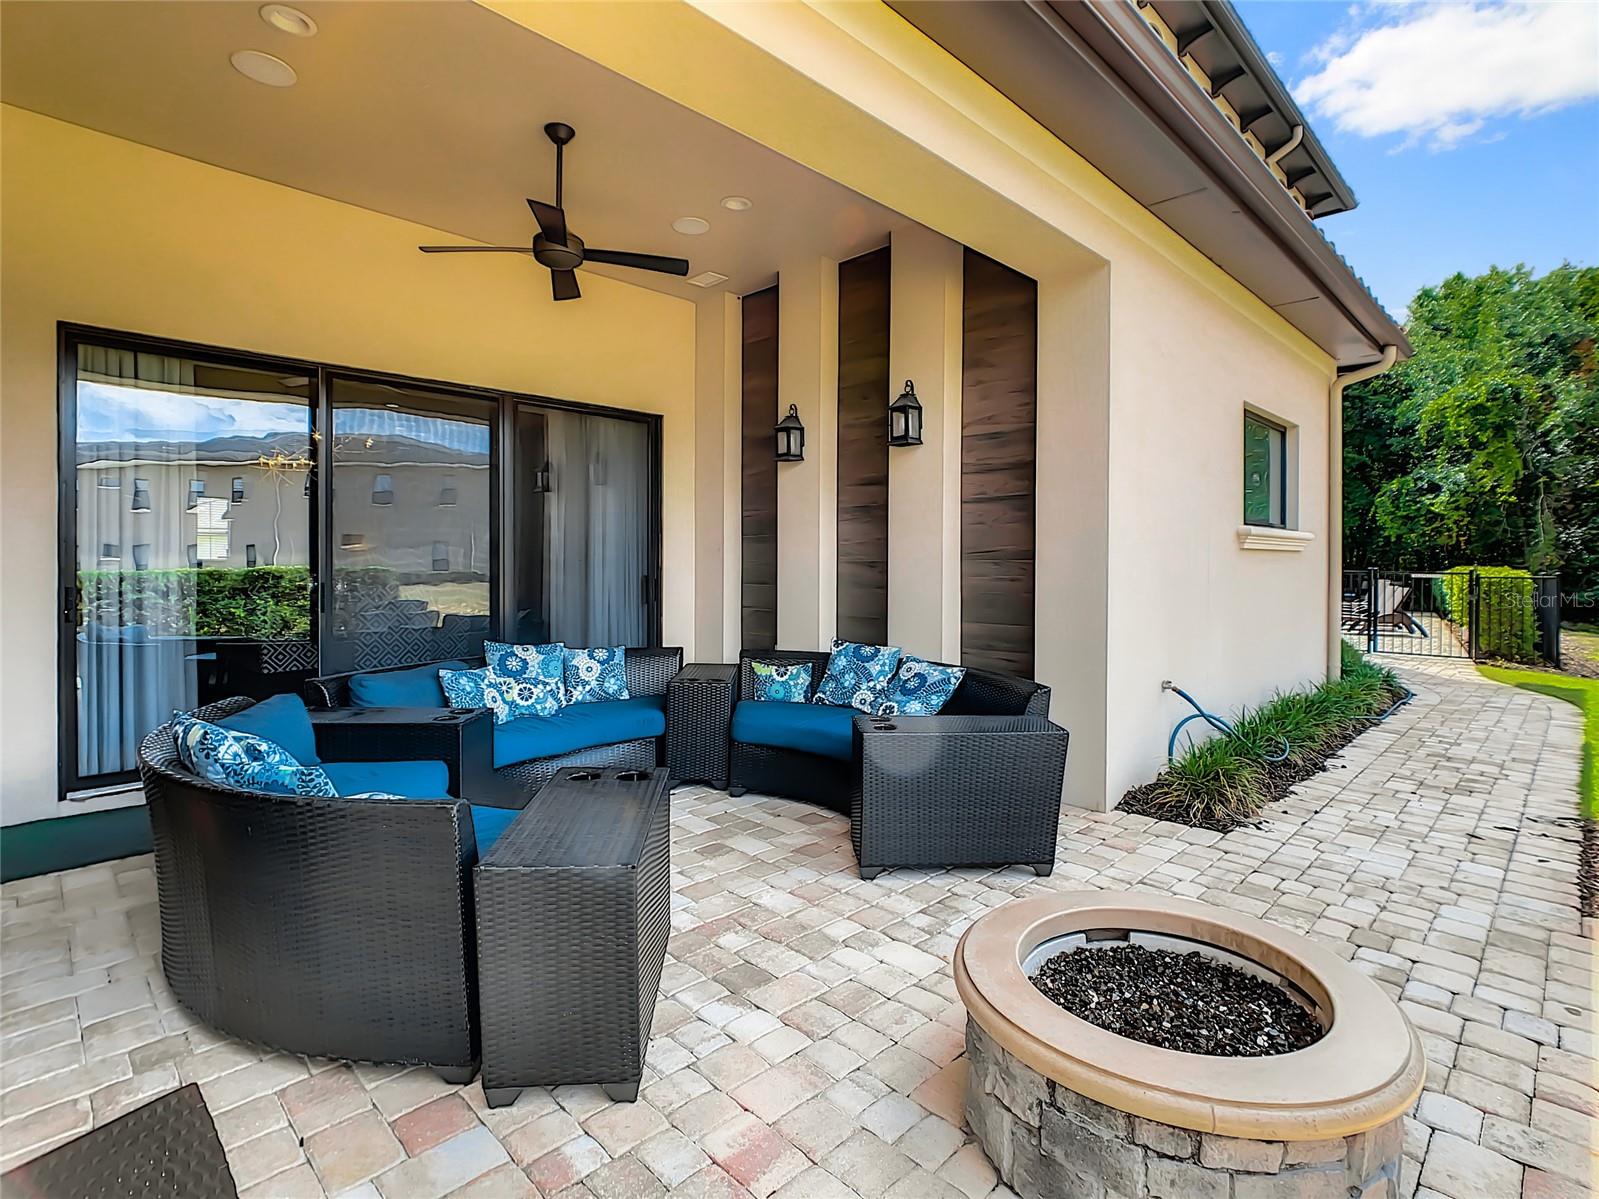 Slide show image of the Orlando Florida Home for Sale 74